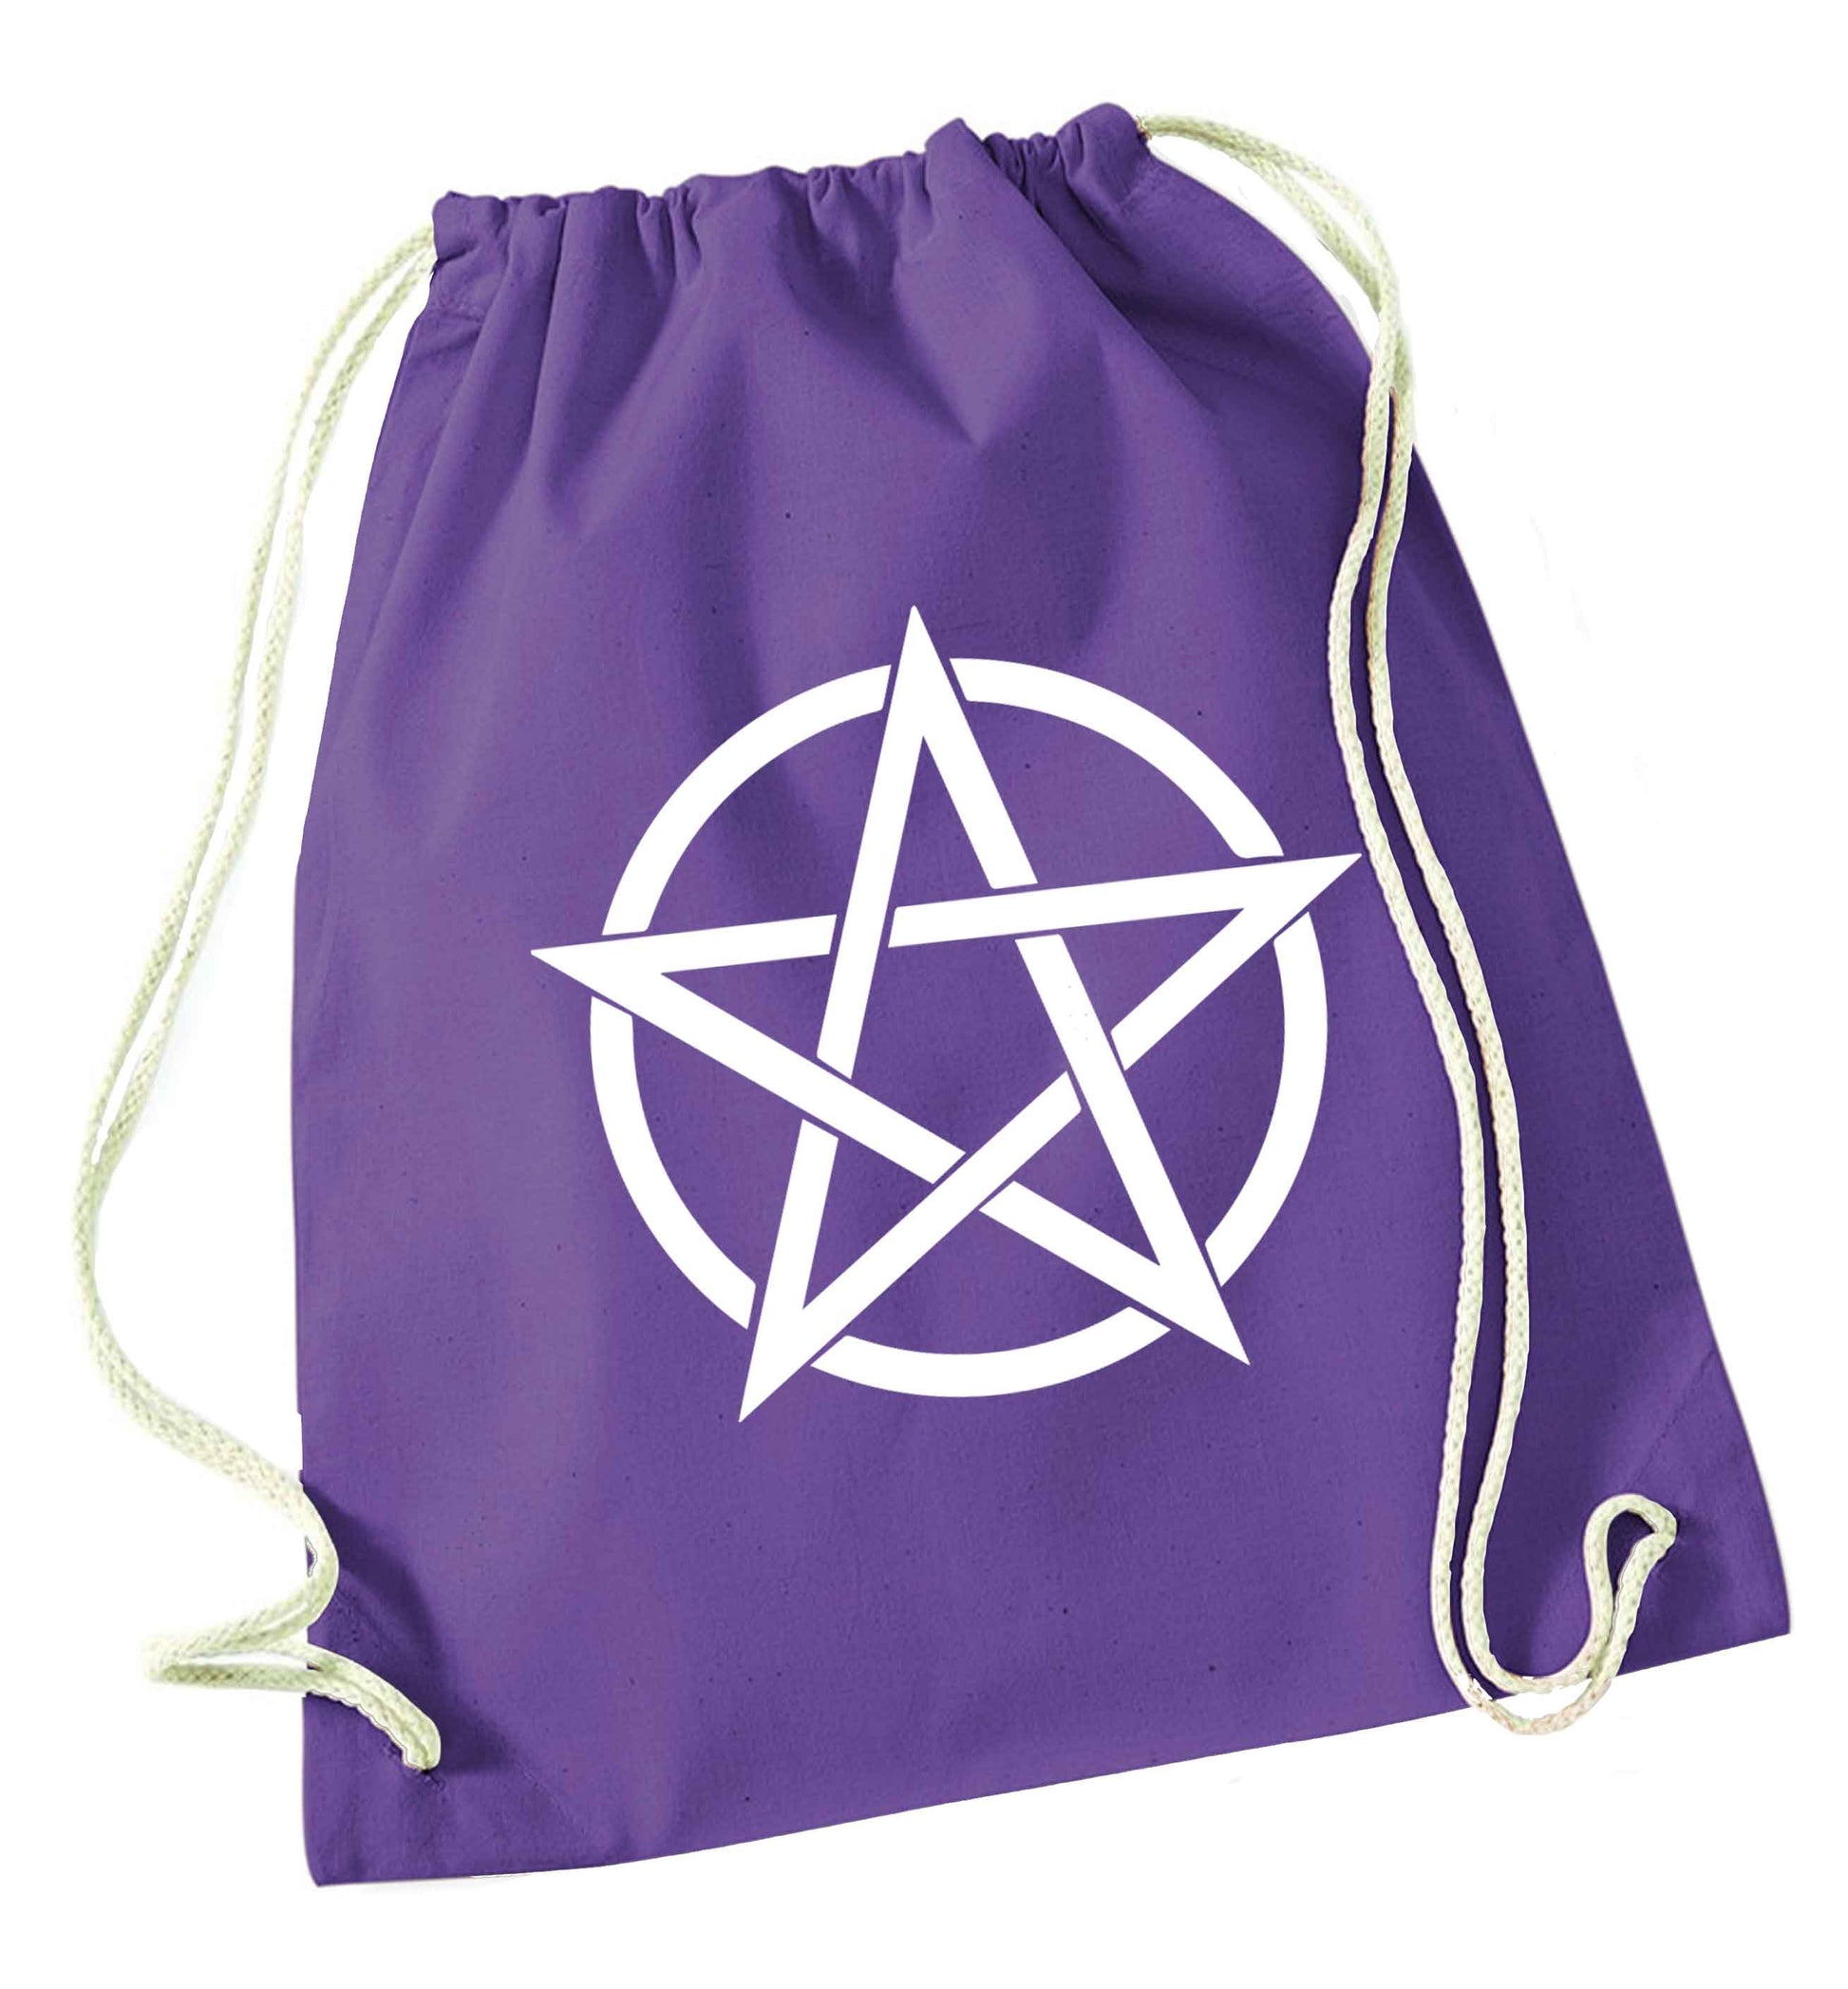 Pentagram symbol purple drawstring bag